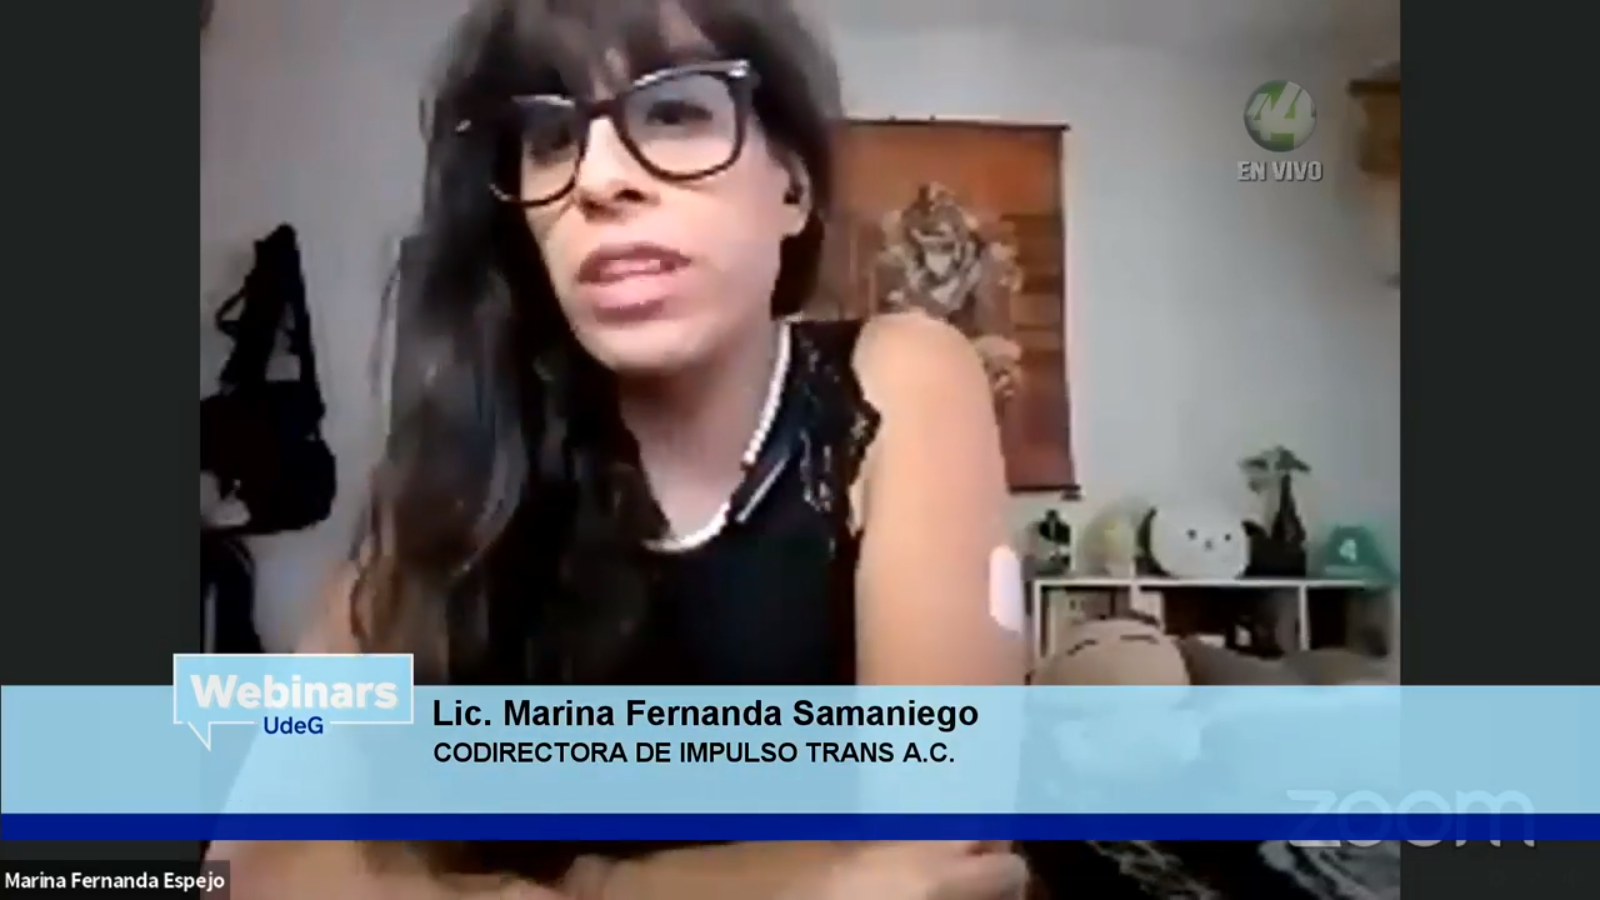 La Codirectora de Impulso Trans, AC, e Incidir AC, Marina Fernanda Samaniego